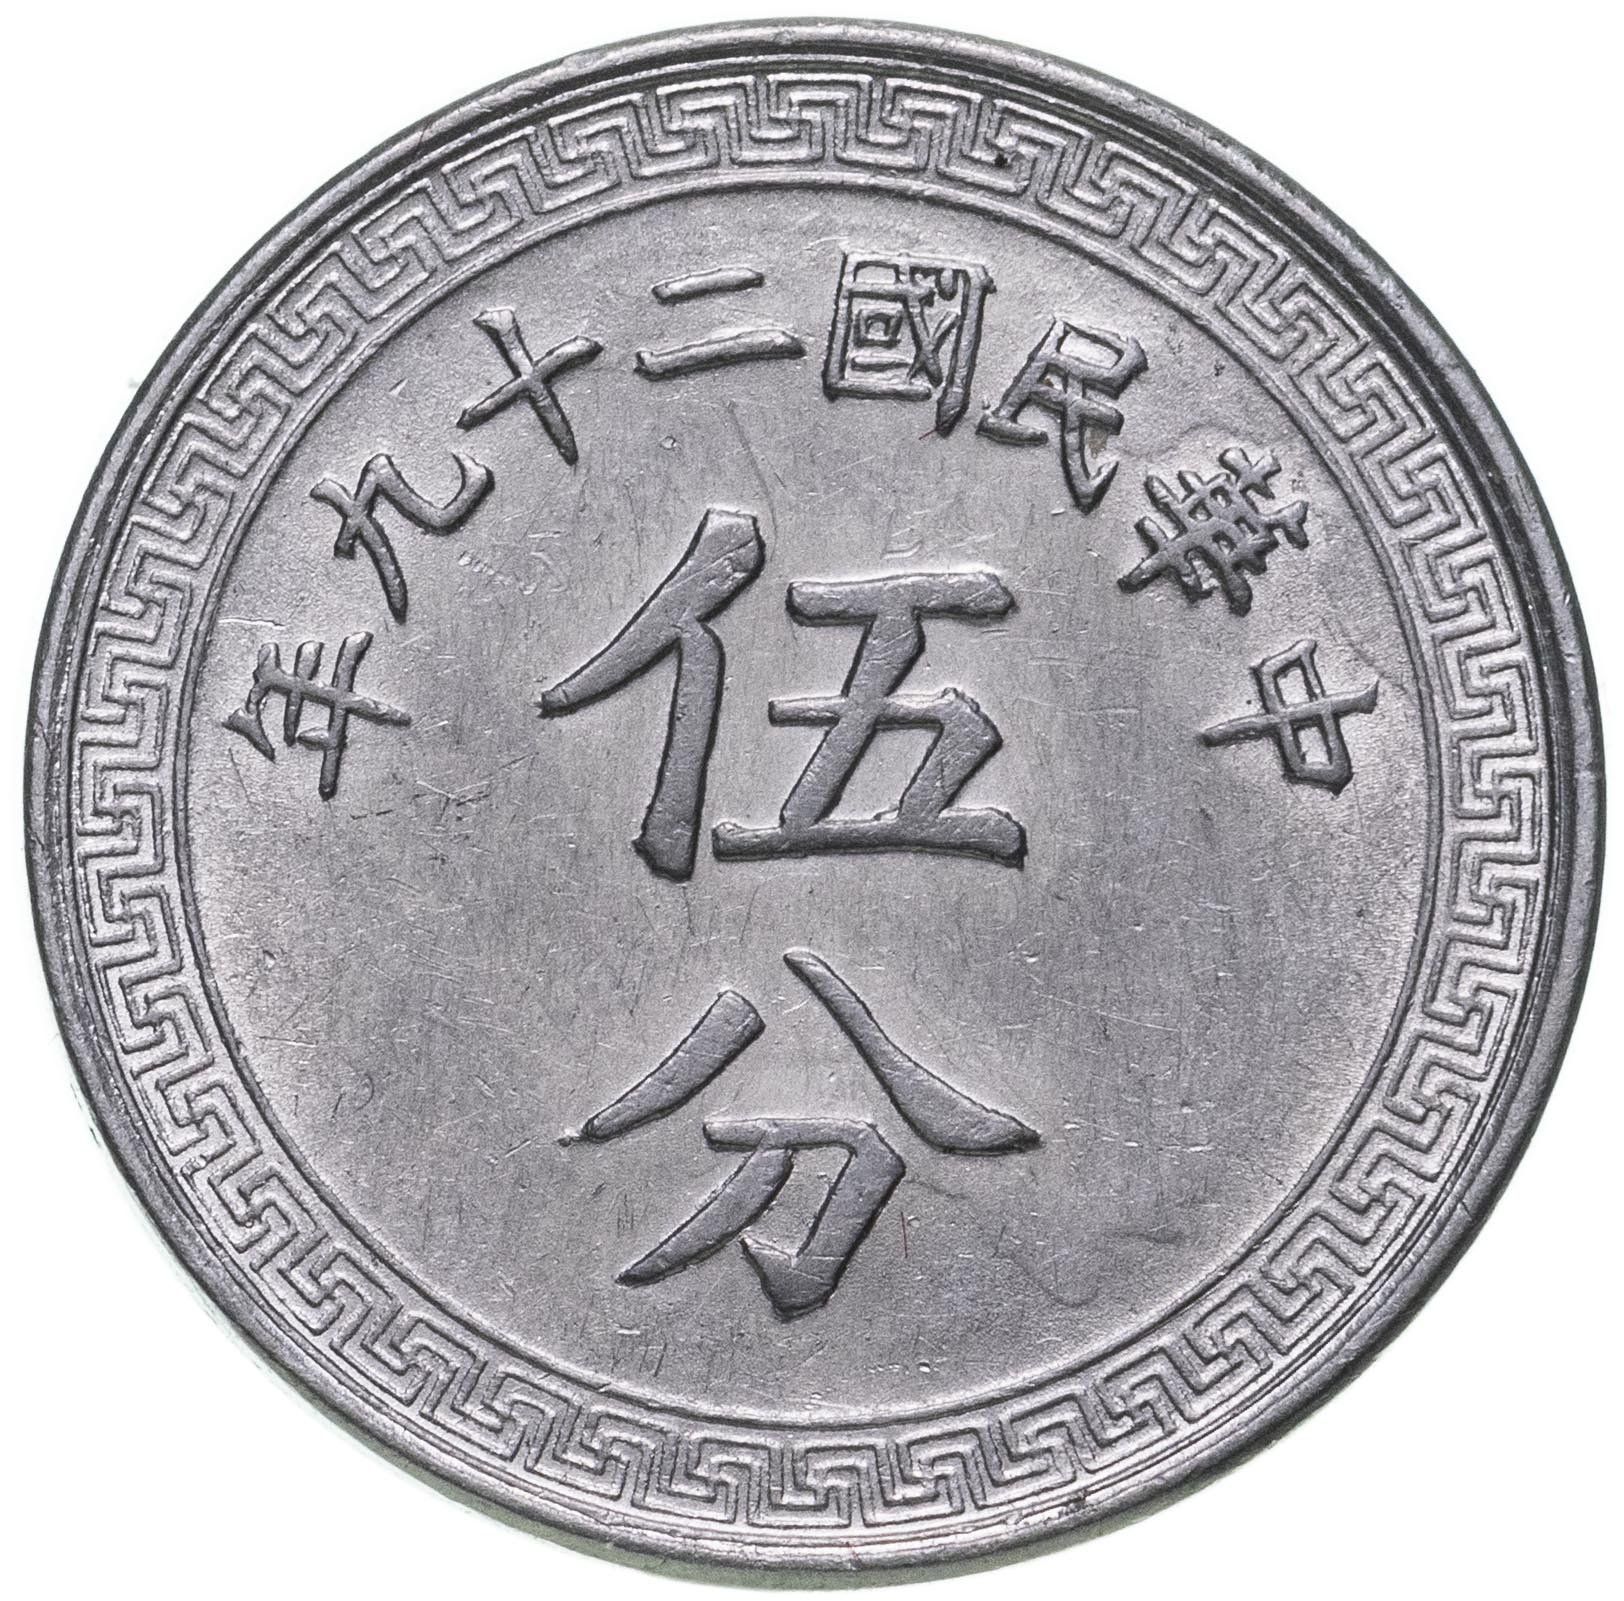 1 фень. Китайский фынь монета. Монеты Китая фынь. Монета Фень Китай. Китайский фынь 2001.